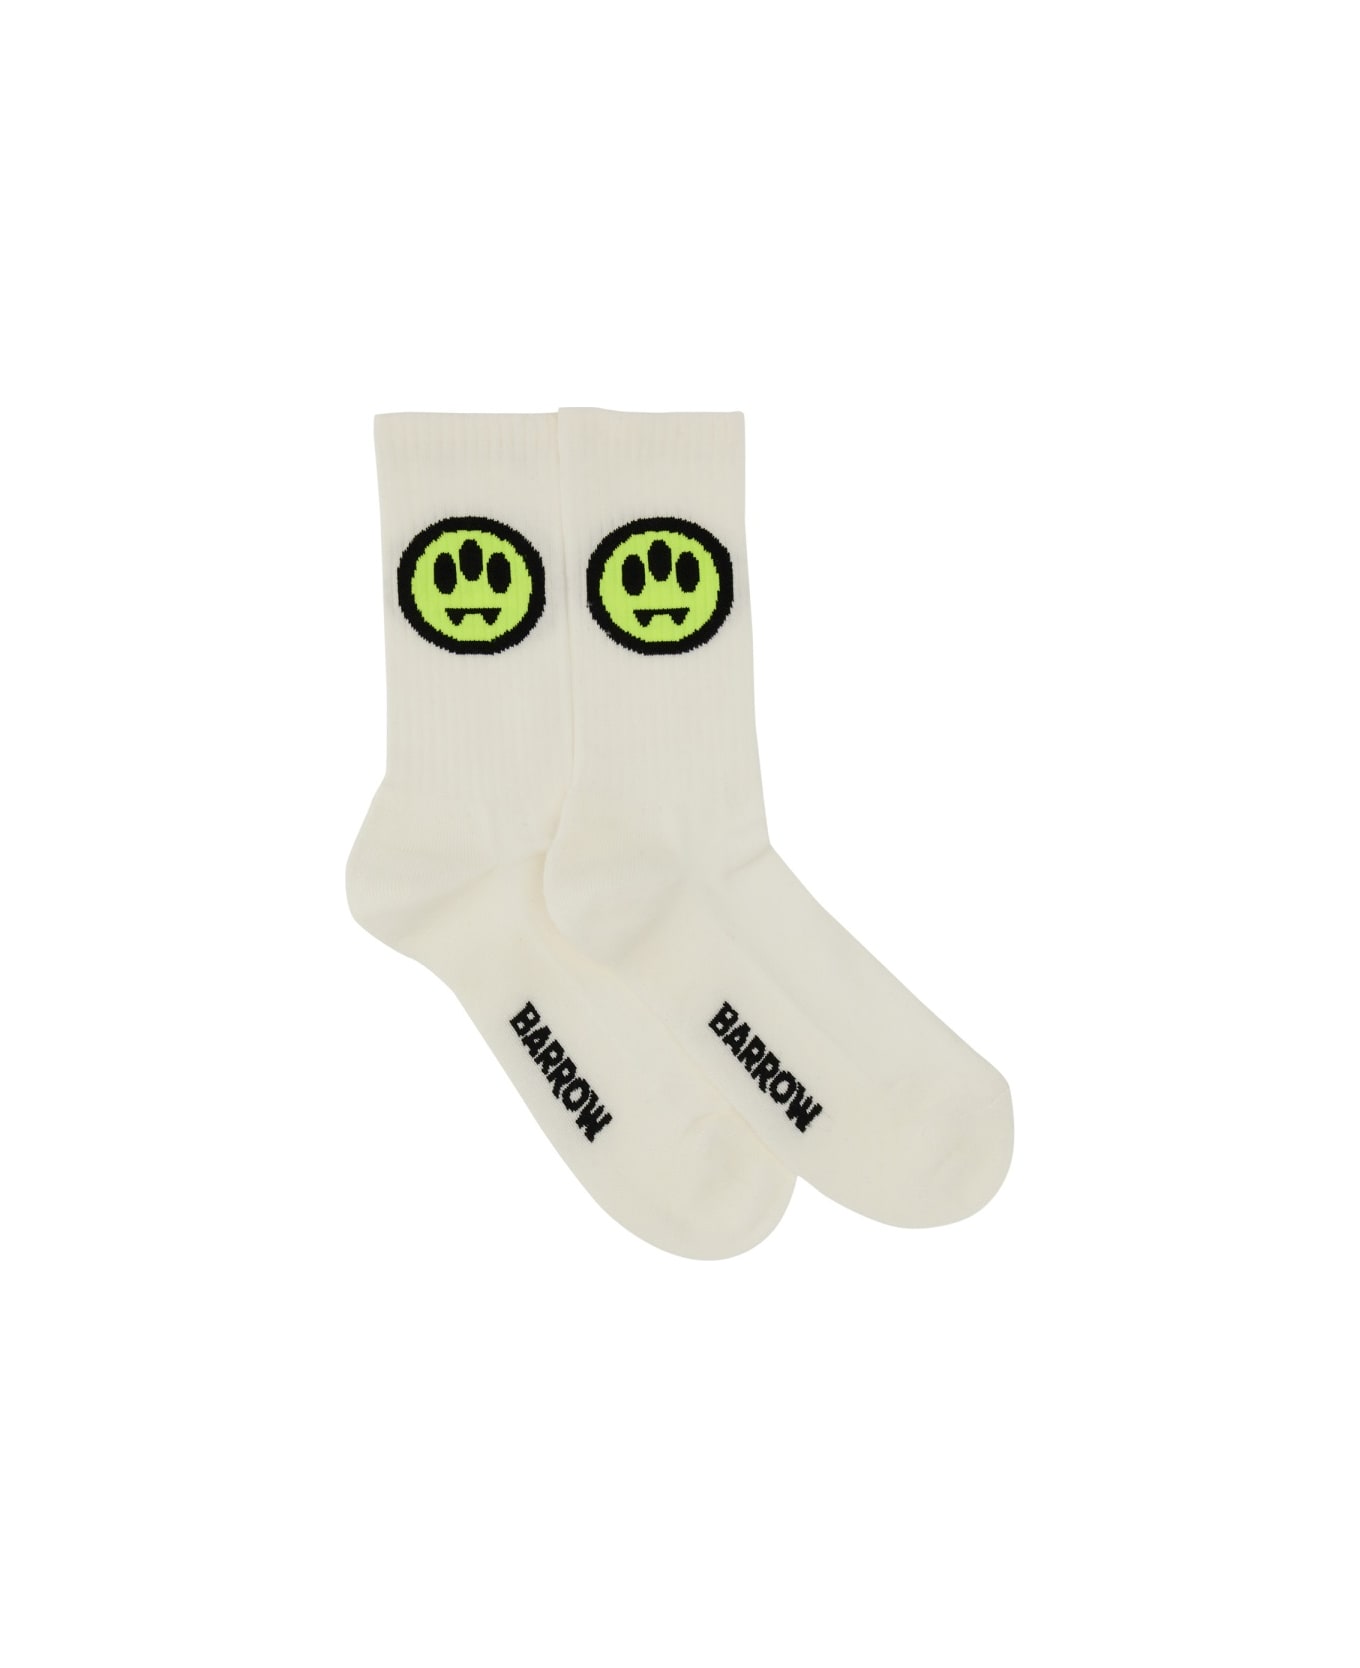 Barrow Socks With Logo - WHITE